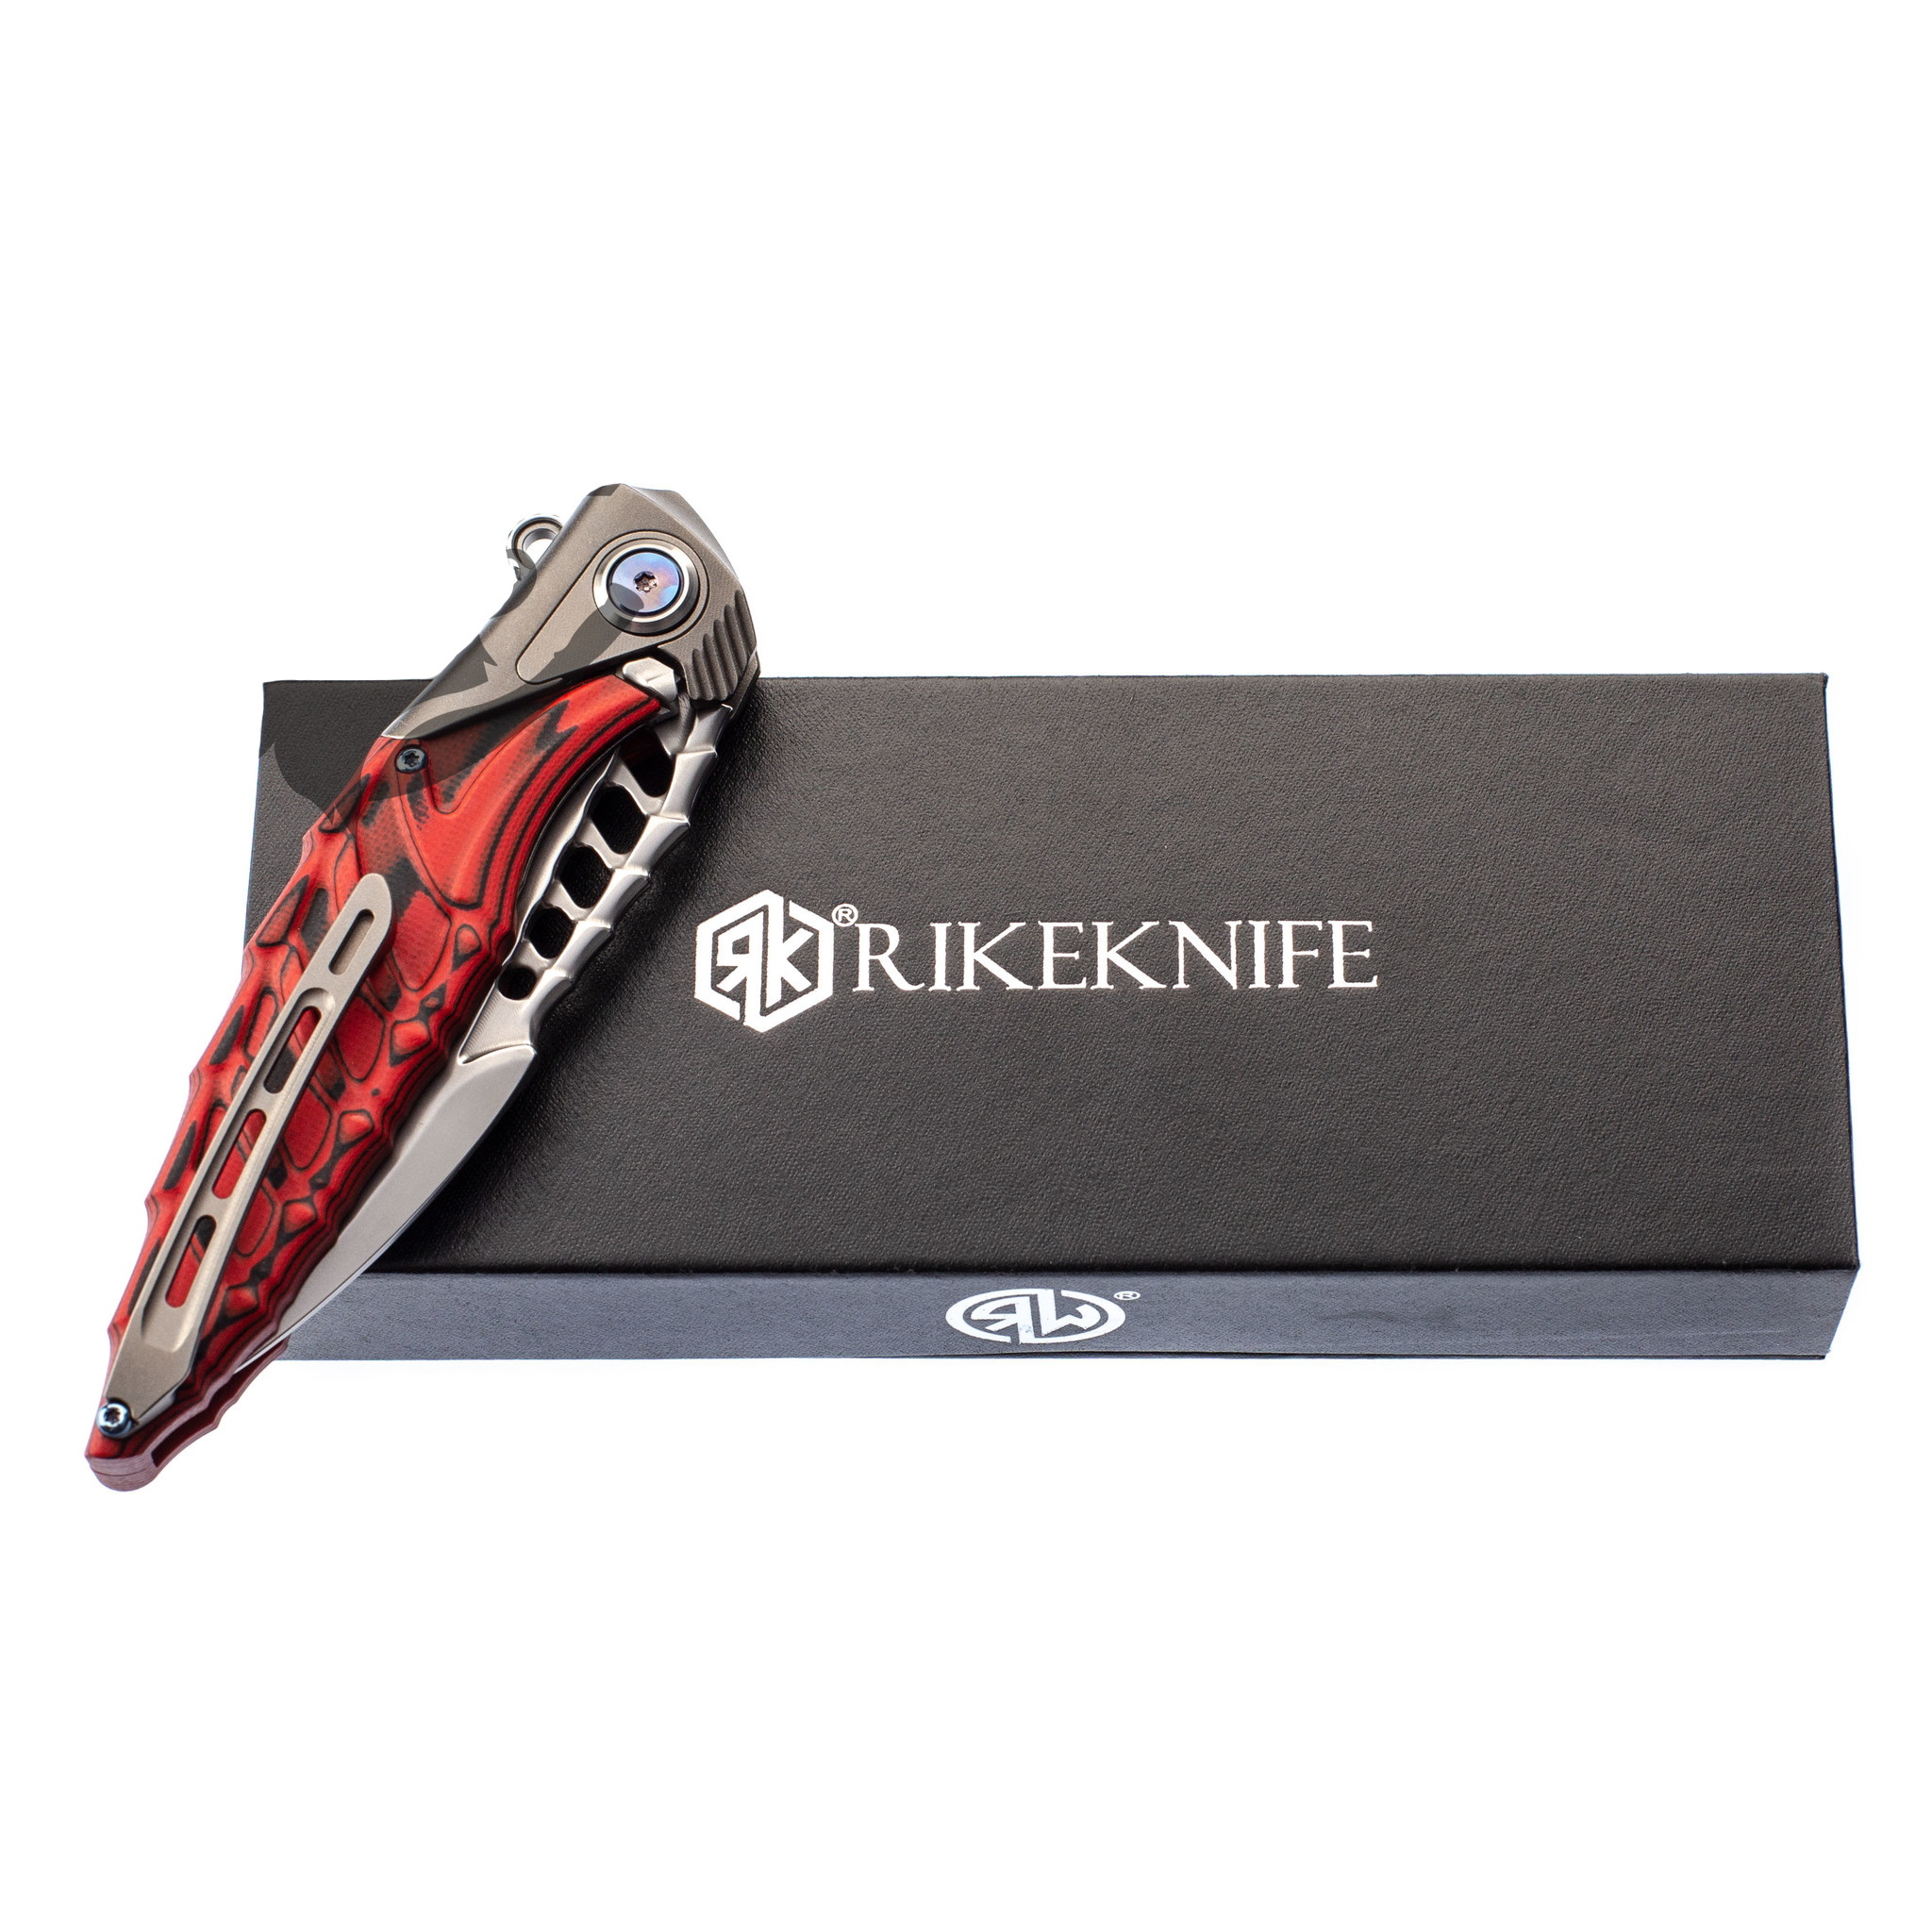 Нож складной Thor 7 Rikeknife, сталь 154CM, Red Titanium/G10 - фото 8